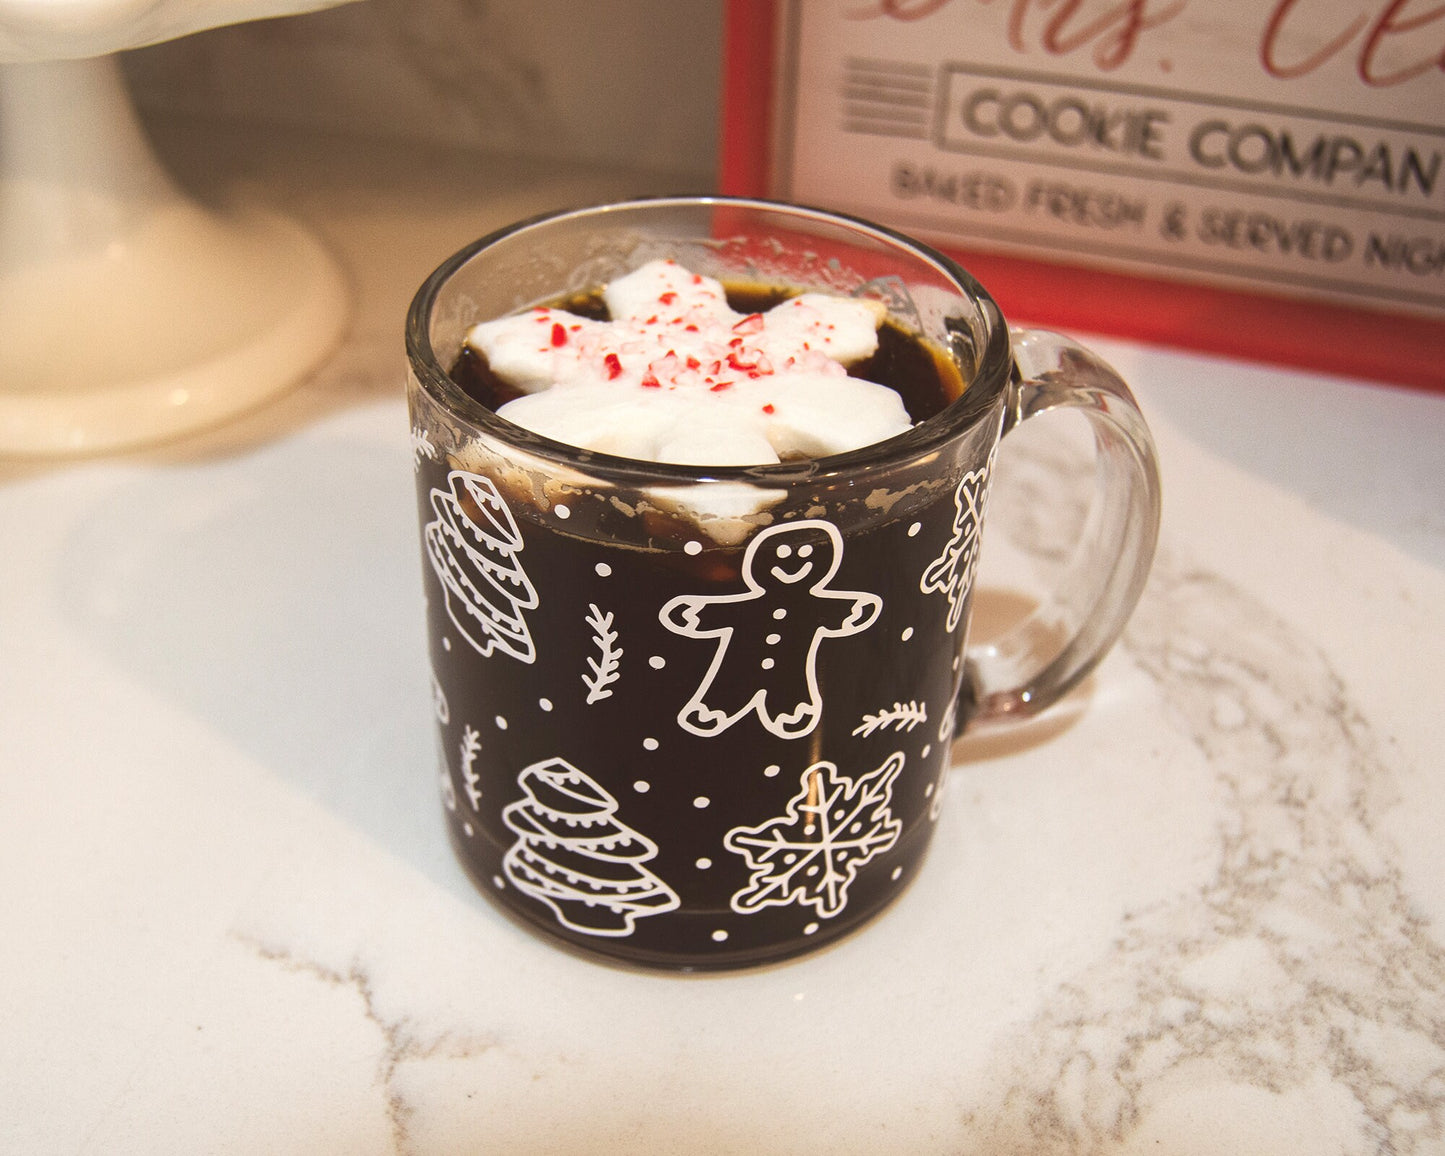 Santa’s Cookies Pattern Clear Glass Mug